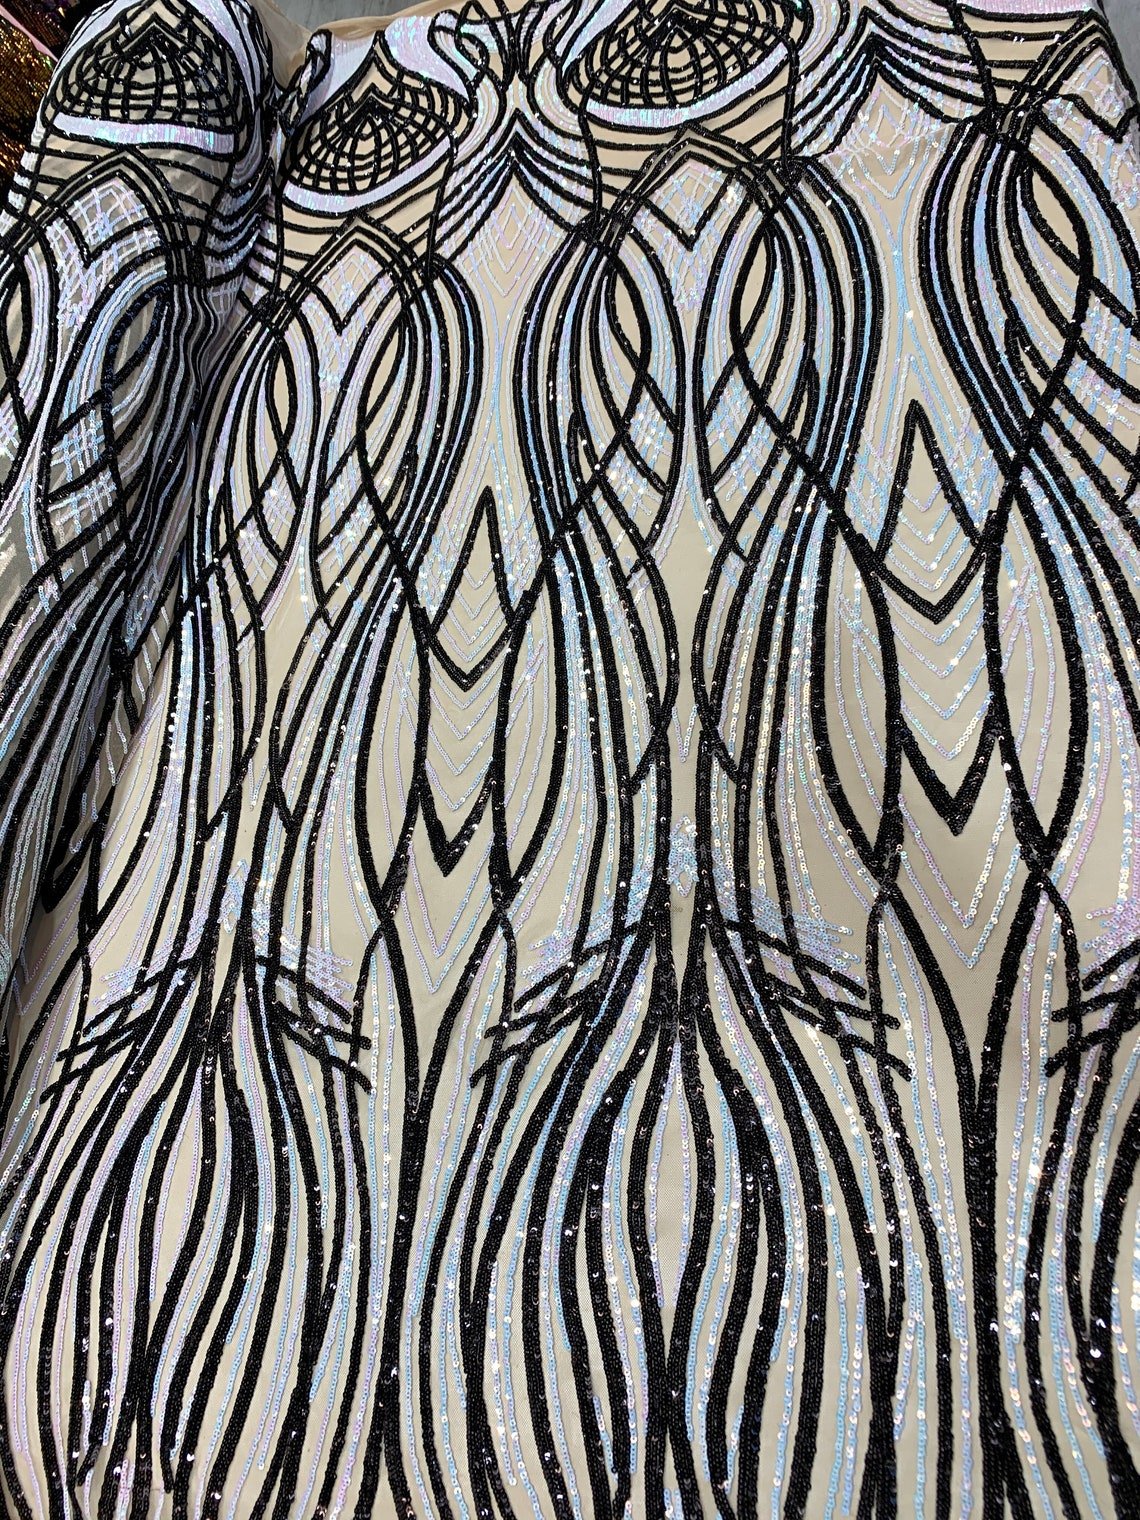 Peacock Iridescent Sky Blue-Black Sequin Fabric on 4 Way stretch MeshICE FABRICSICE FABRICSBy The YardPeacock Iridescent Sky Blue-Black Sequin Fabric on 4 Way stretch Mesh ICE FABRICS